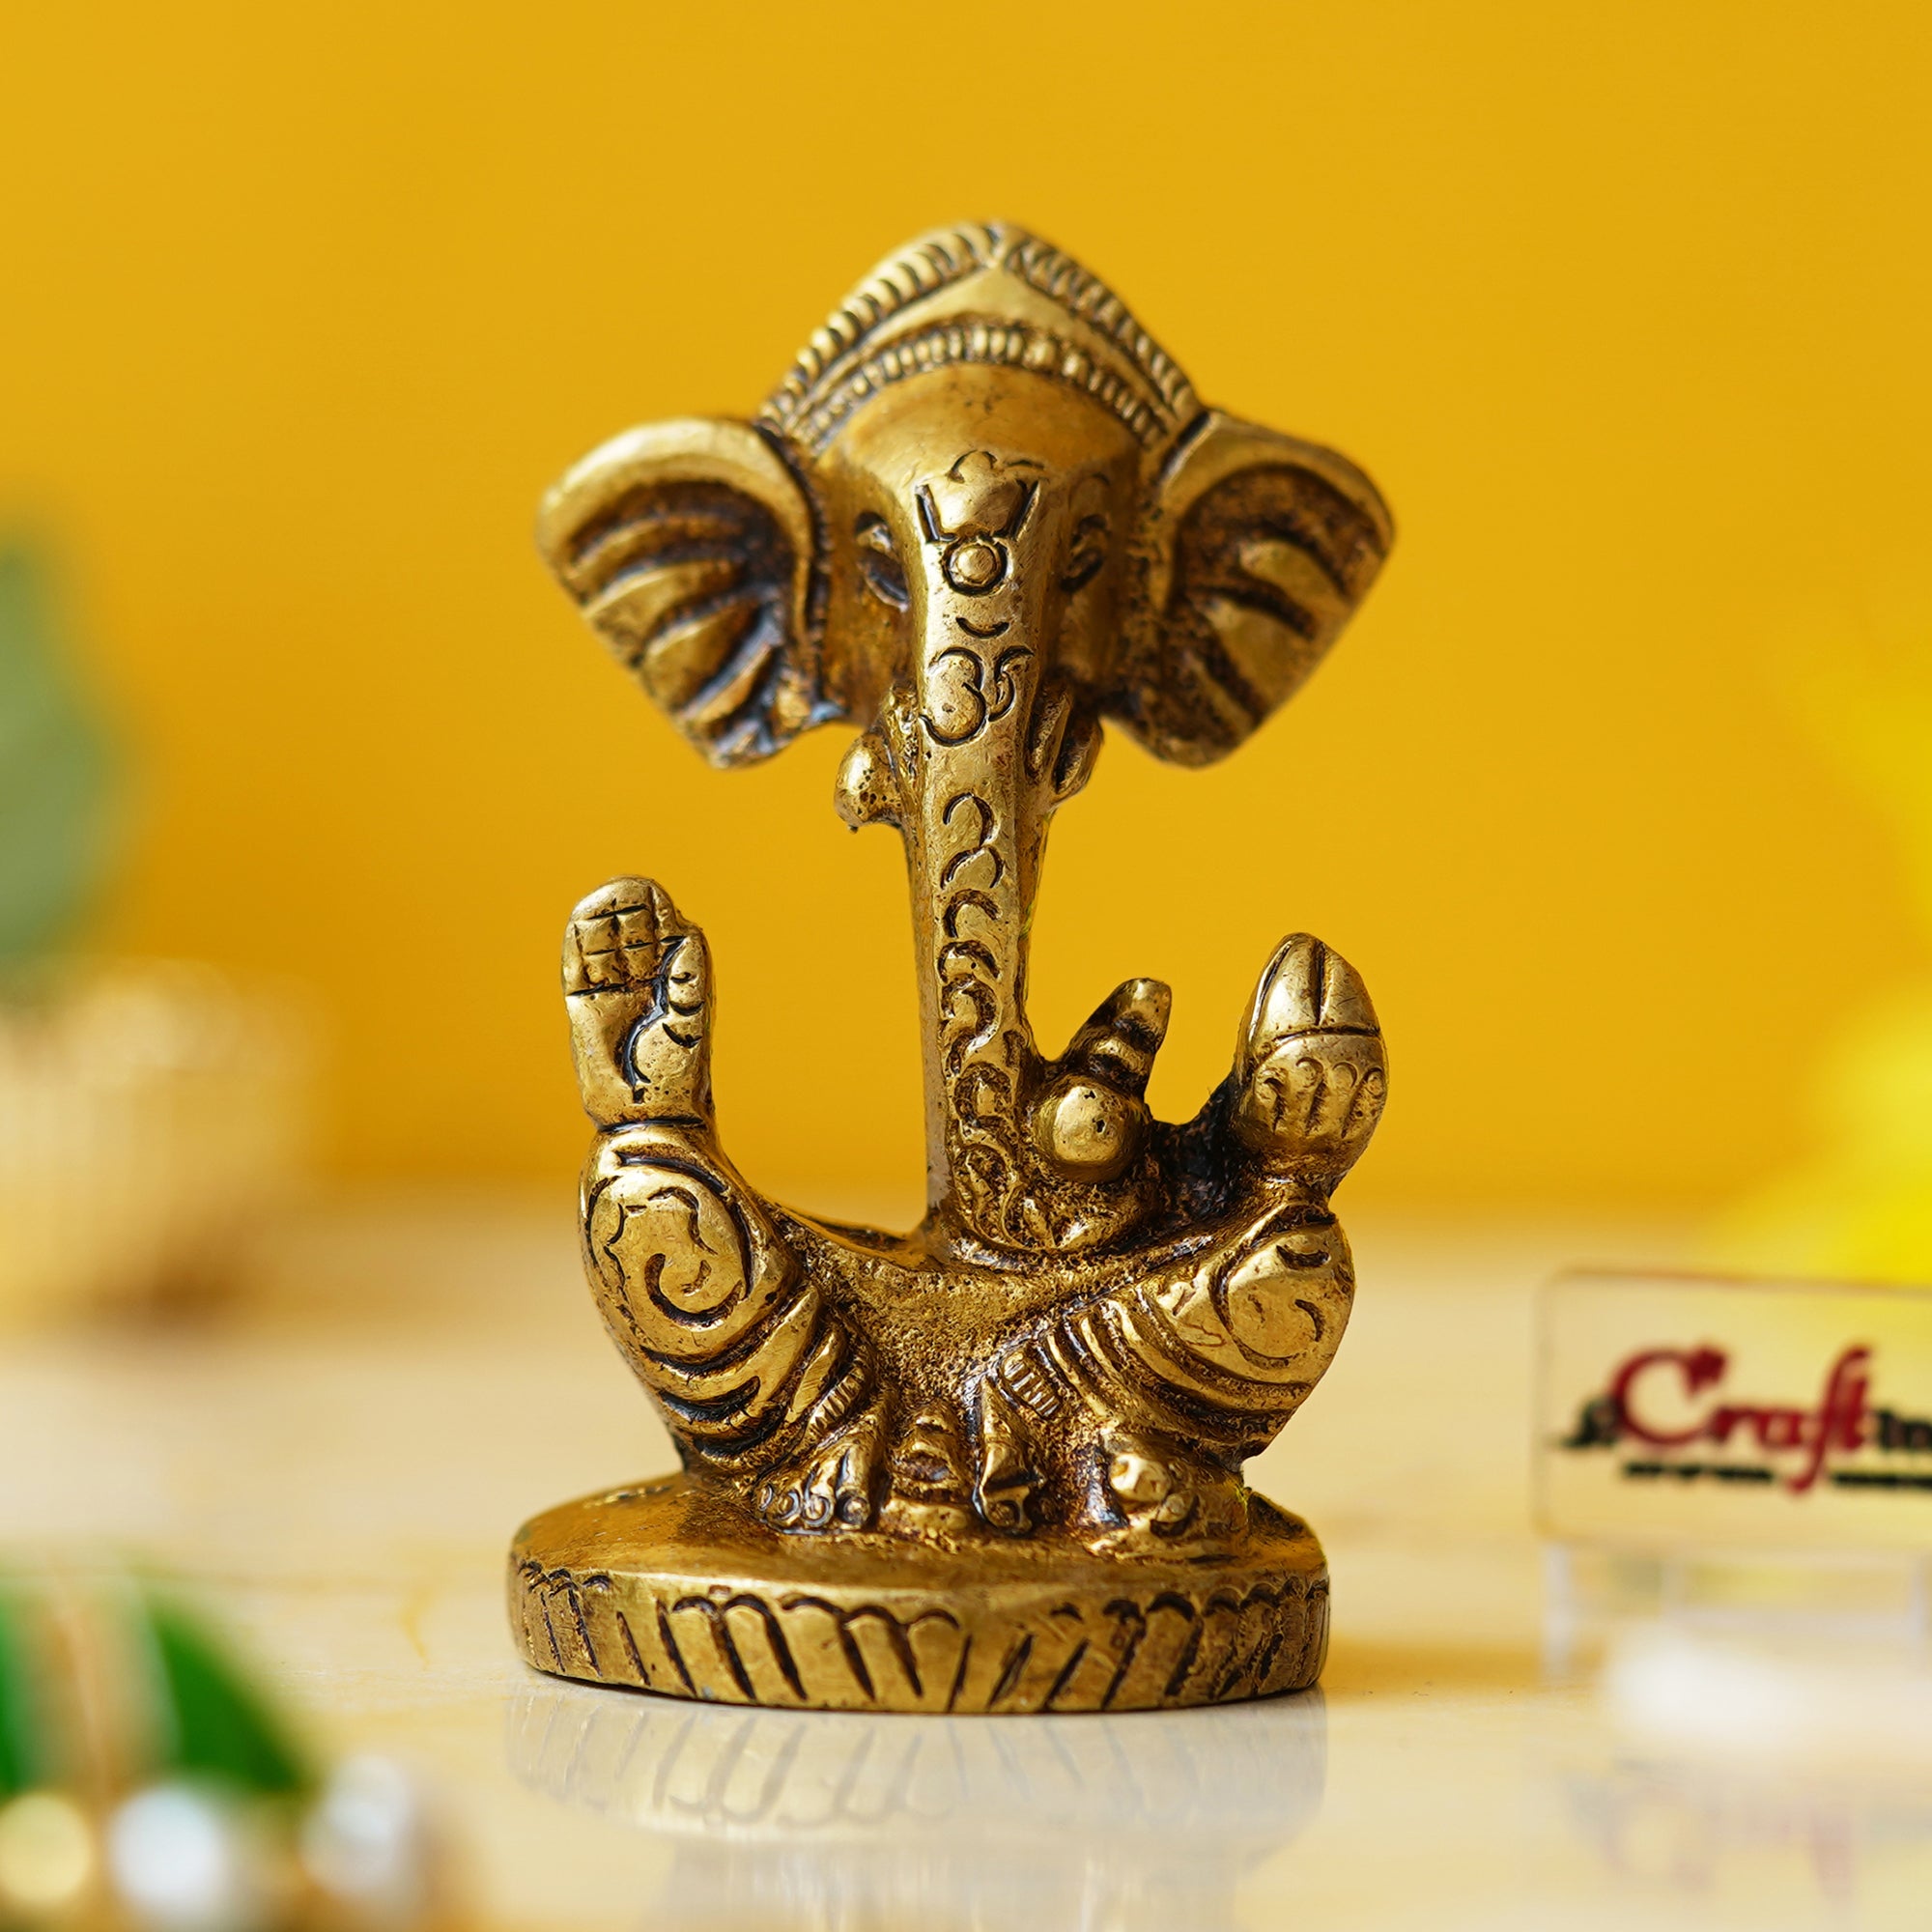 Golden Brass Blessing Lord Ganesha Idol Murti - God Statue for Car Dashboard, Home Decor, Office Desk, Temple Mandir